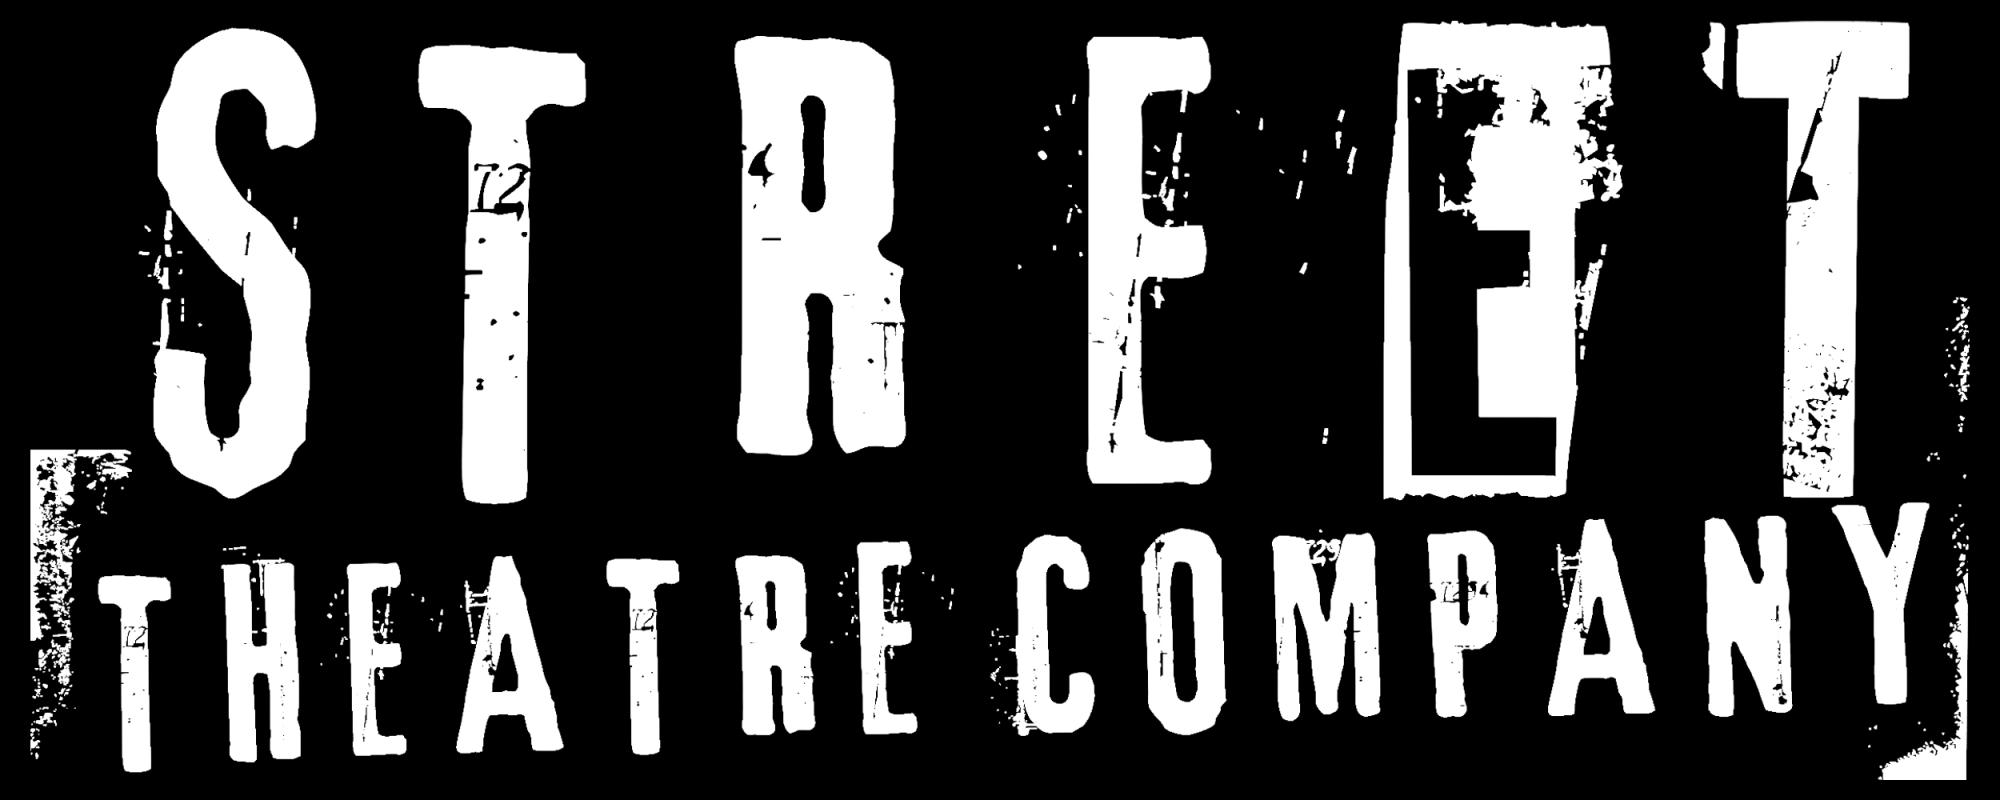 Street Theatre Company Logo